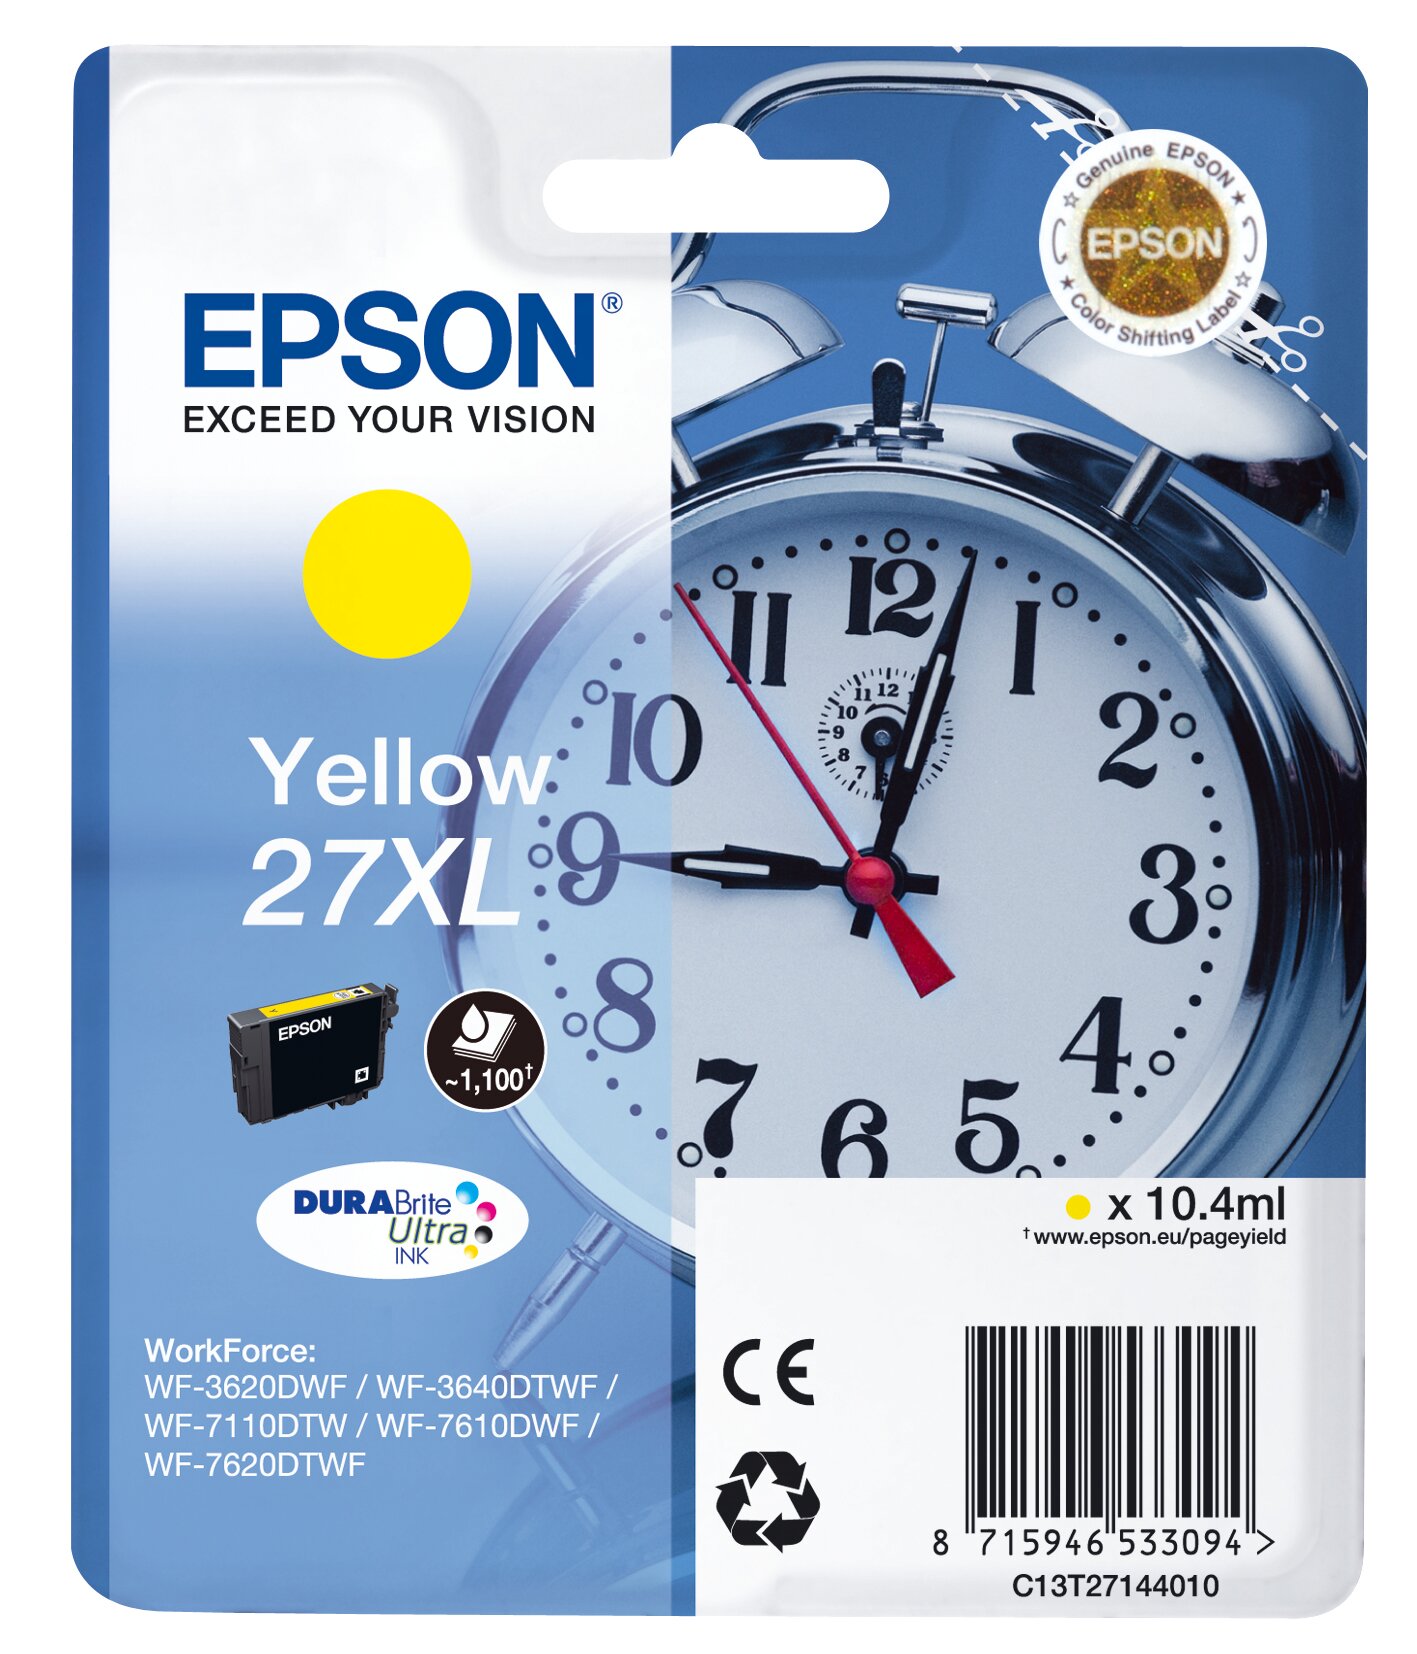 Epson 27XL cartridge yellow T27144010 inkjet